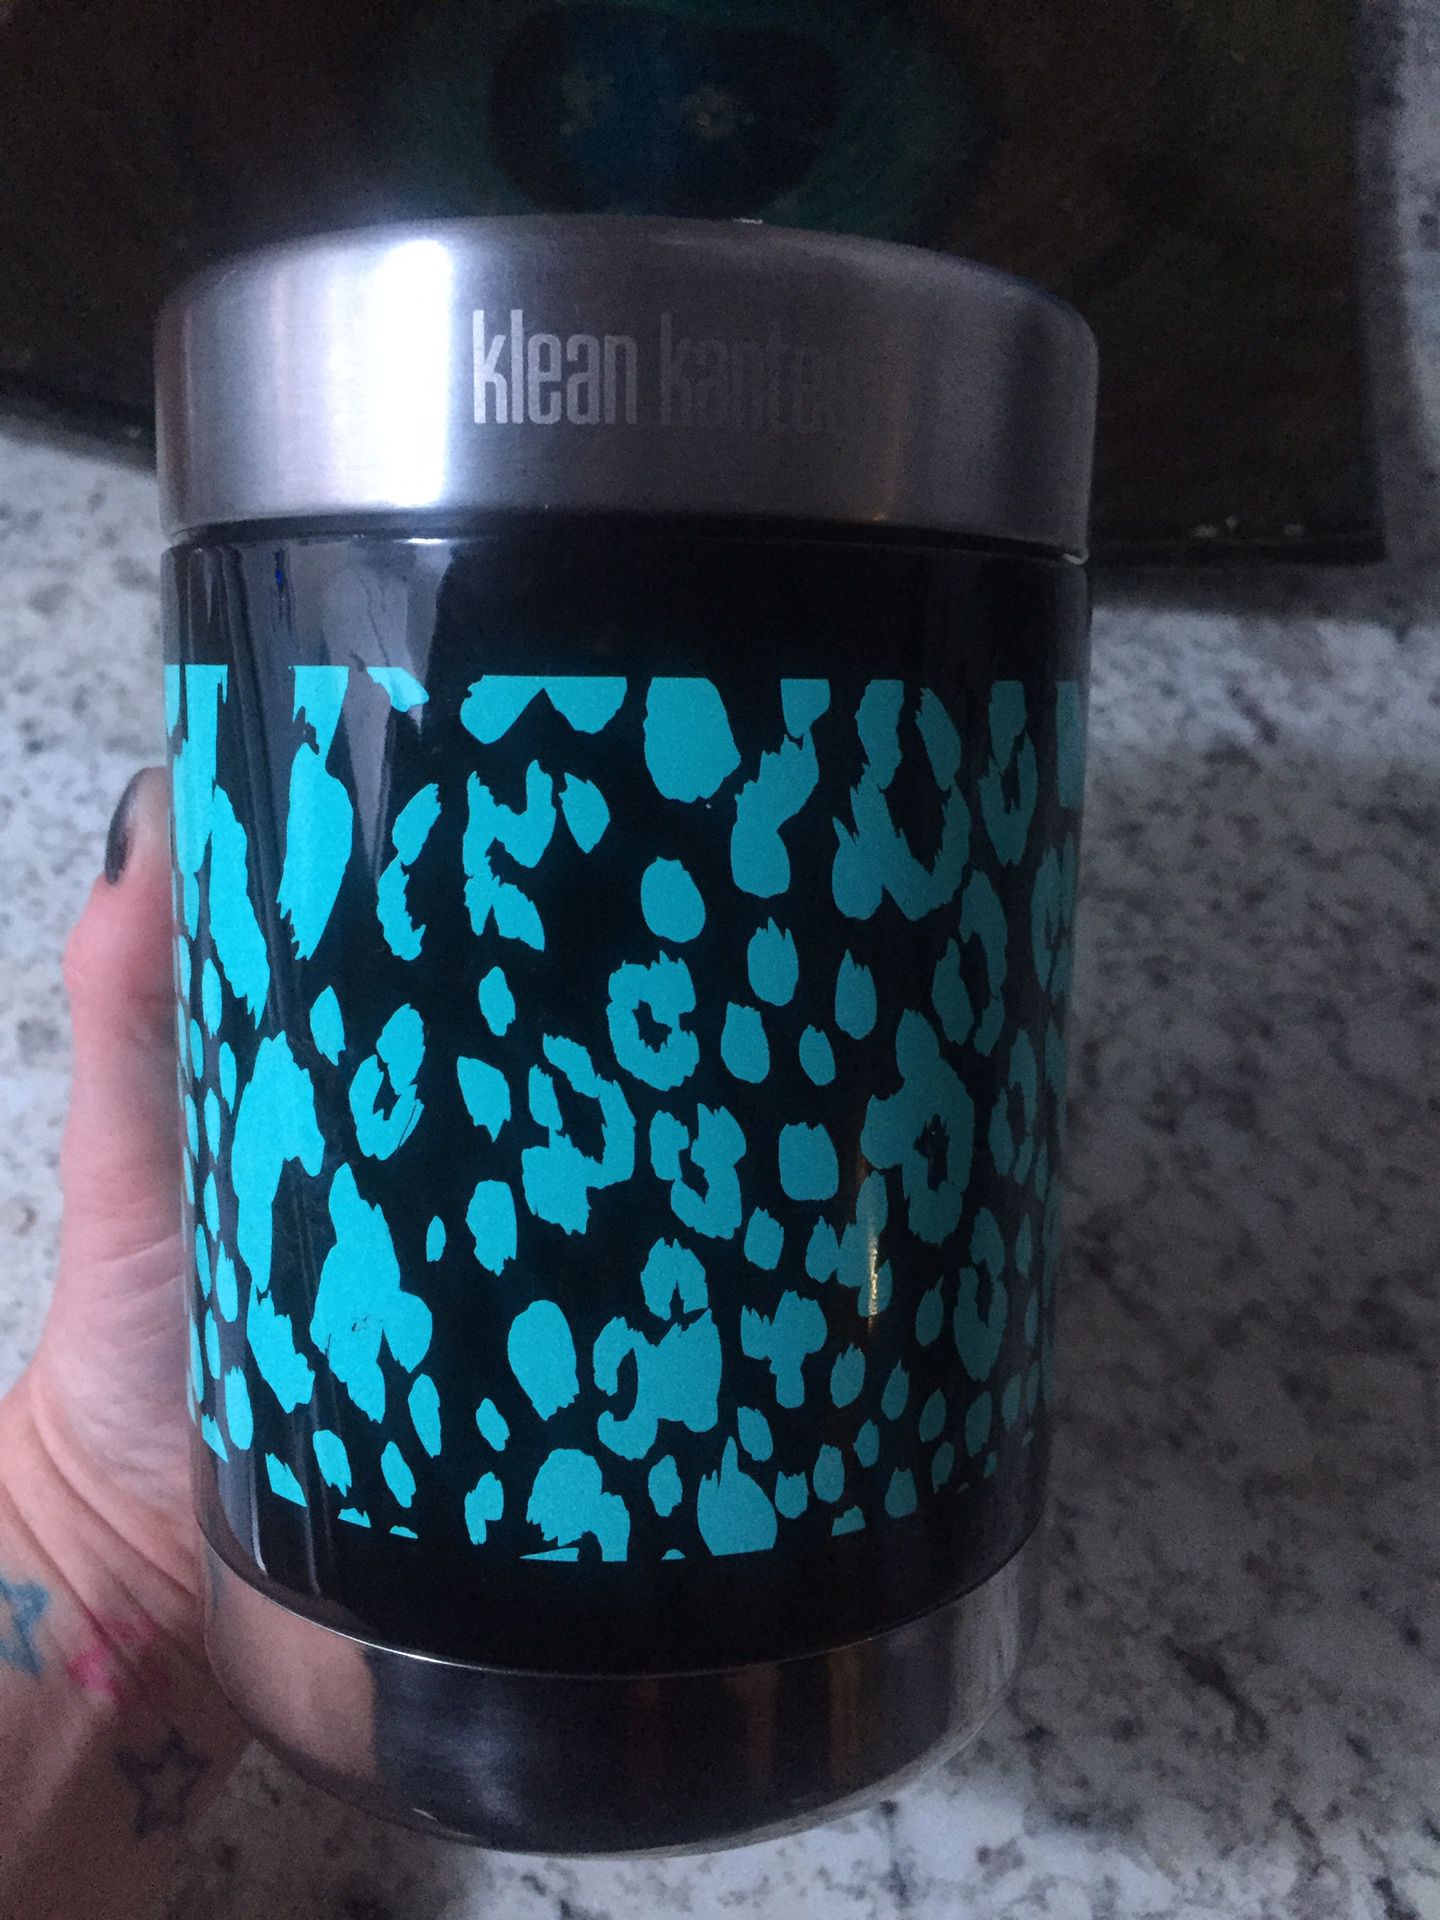 16 oz Klean Kanteen Vacuum Sealed Food Canister